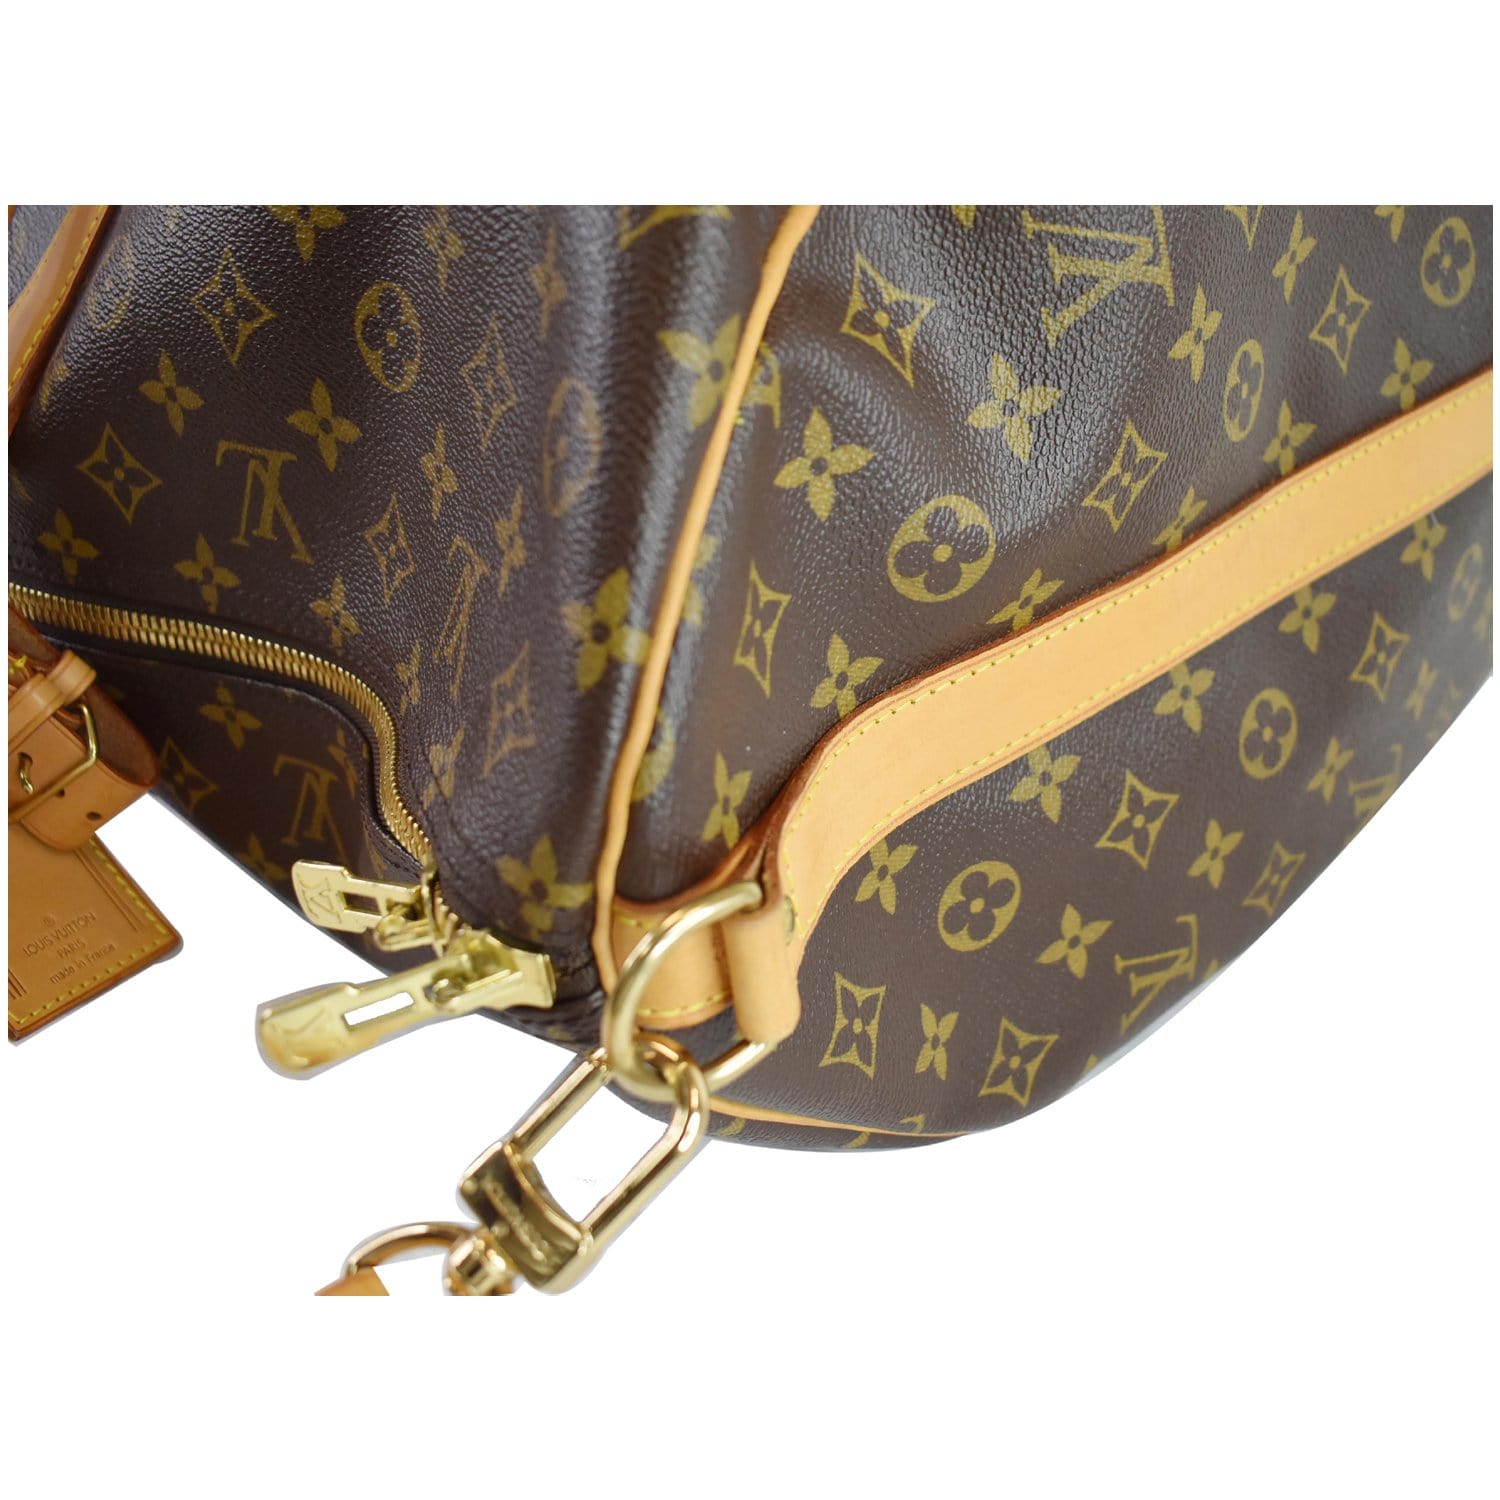 Louis Vuitton Keepall 60 Bandouliere Monogram Bag